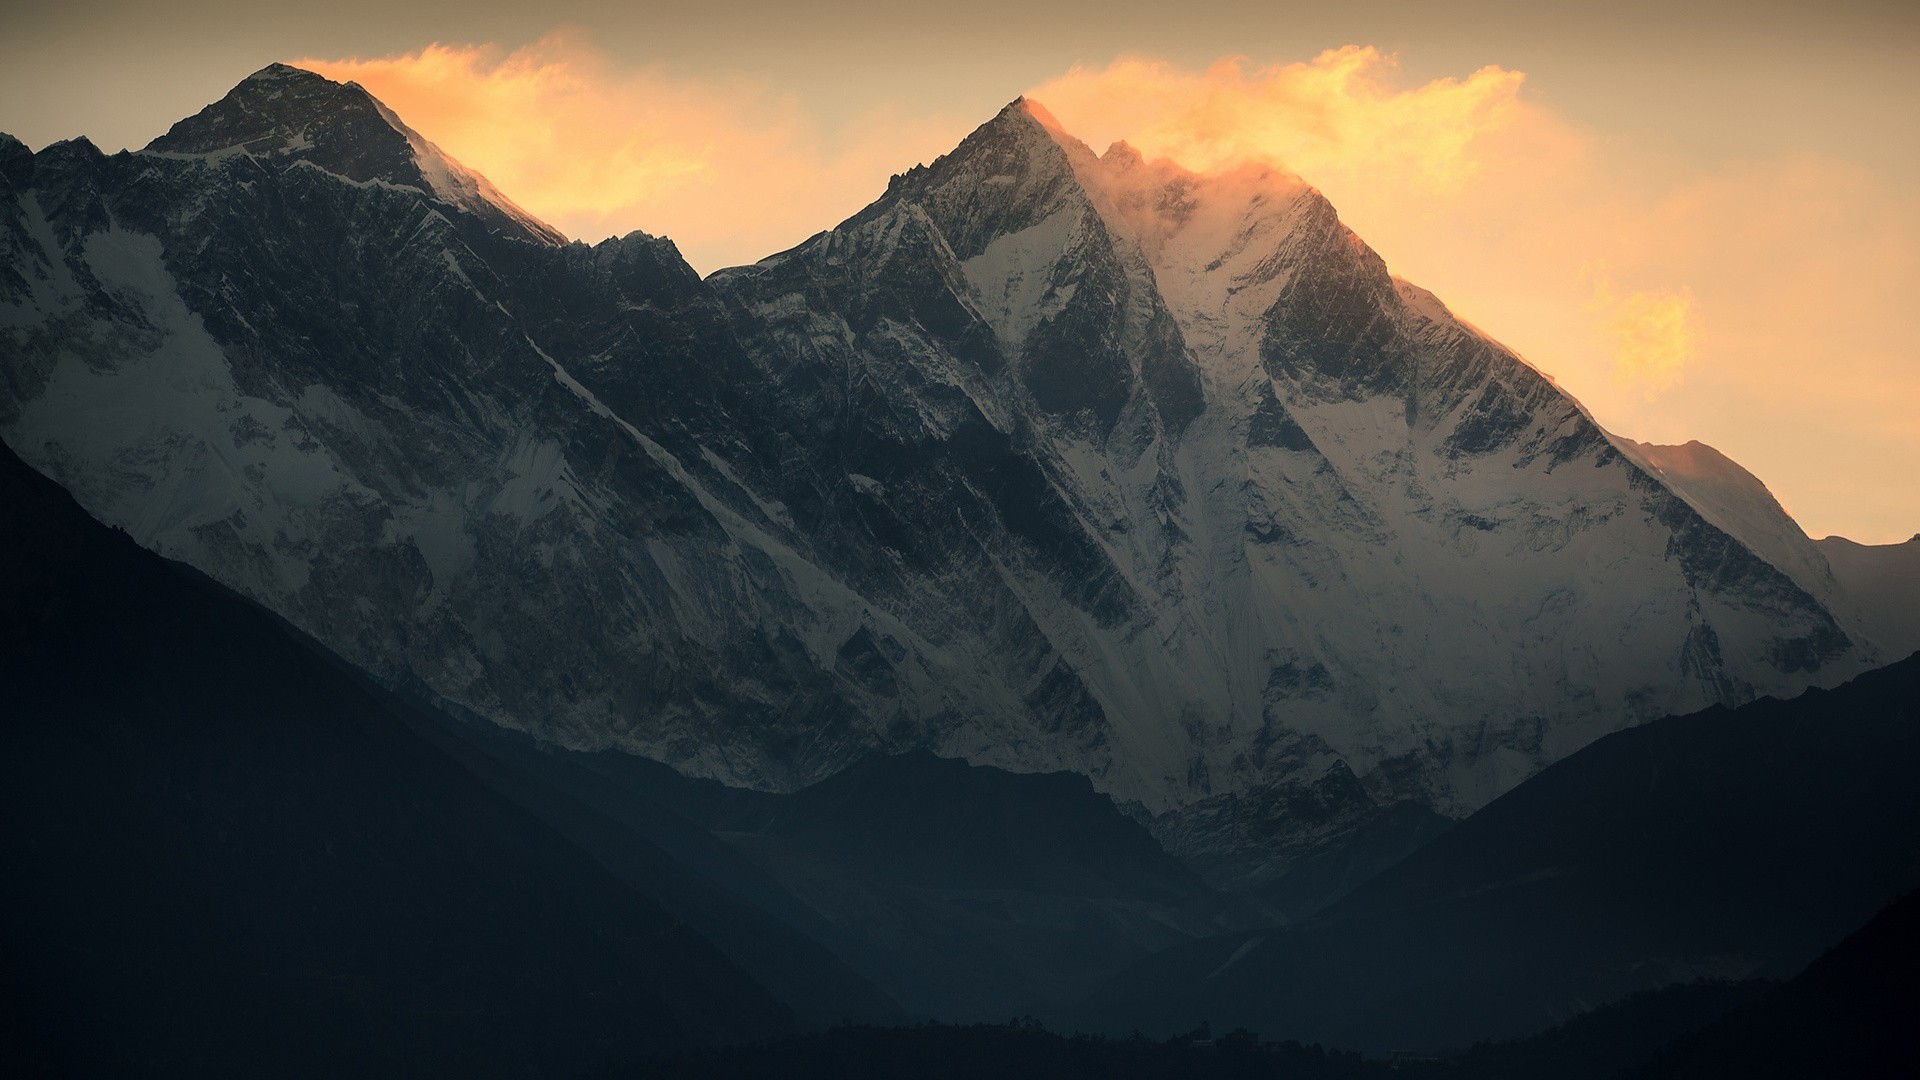 General 1920x1080 mountains landscape winter snow Mount Everest hills nature sky clouds Himalayas